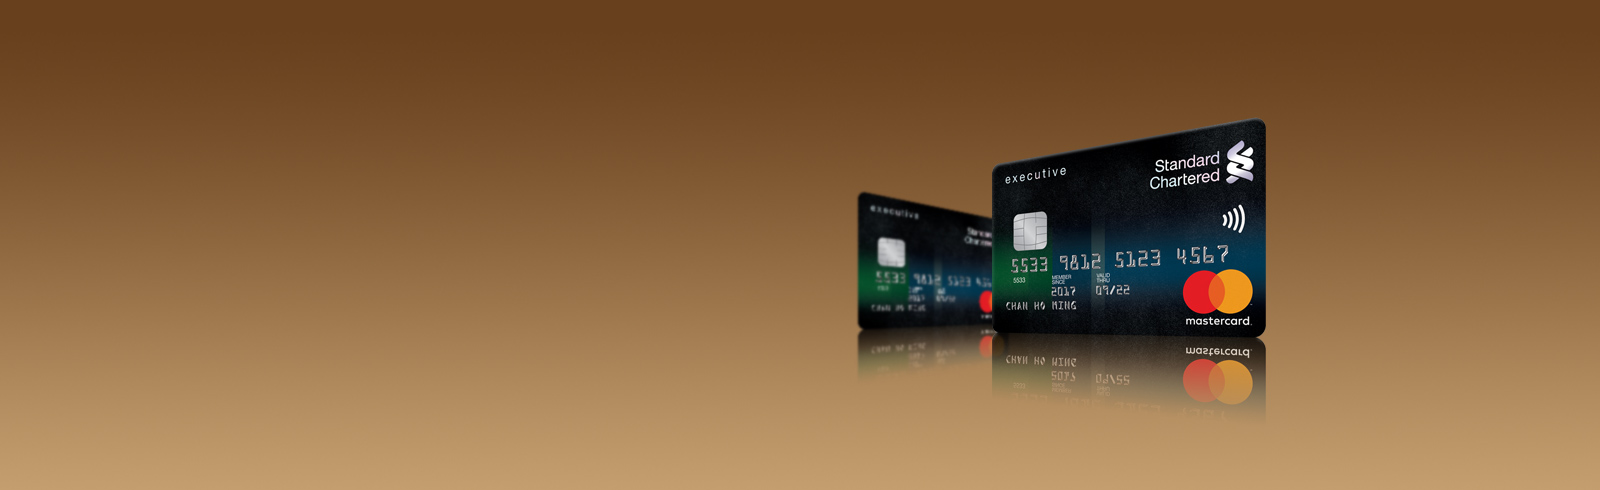 Standard Chartered executive Credit Card